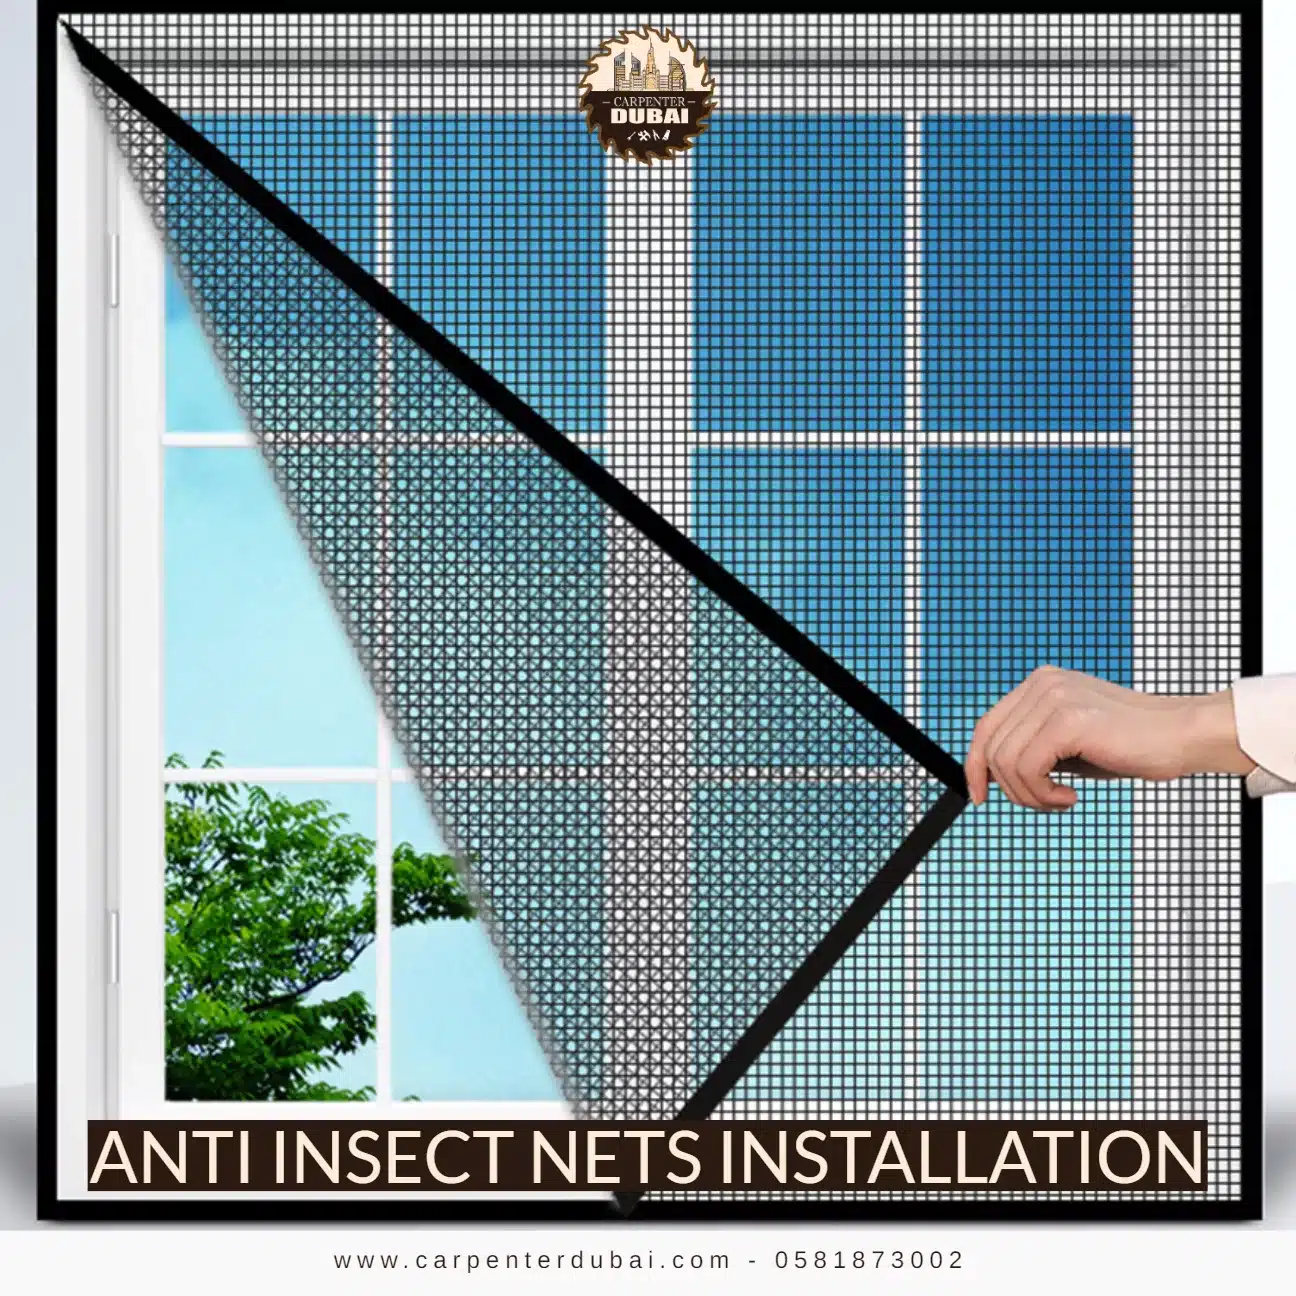 https://carpenterdubai.com/wp-content/uploads/2018/11/Anti-Insect-Nets-Installation-2-jpeg.webp